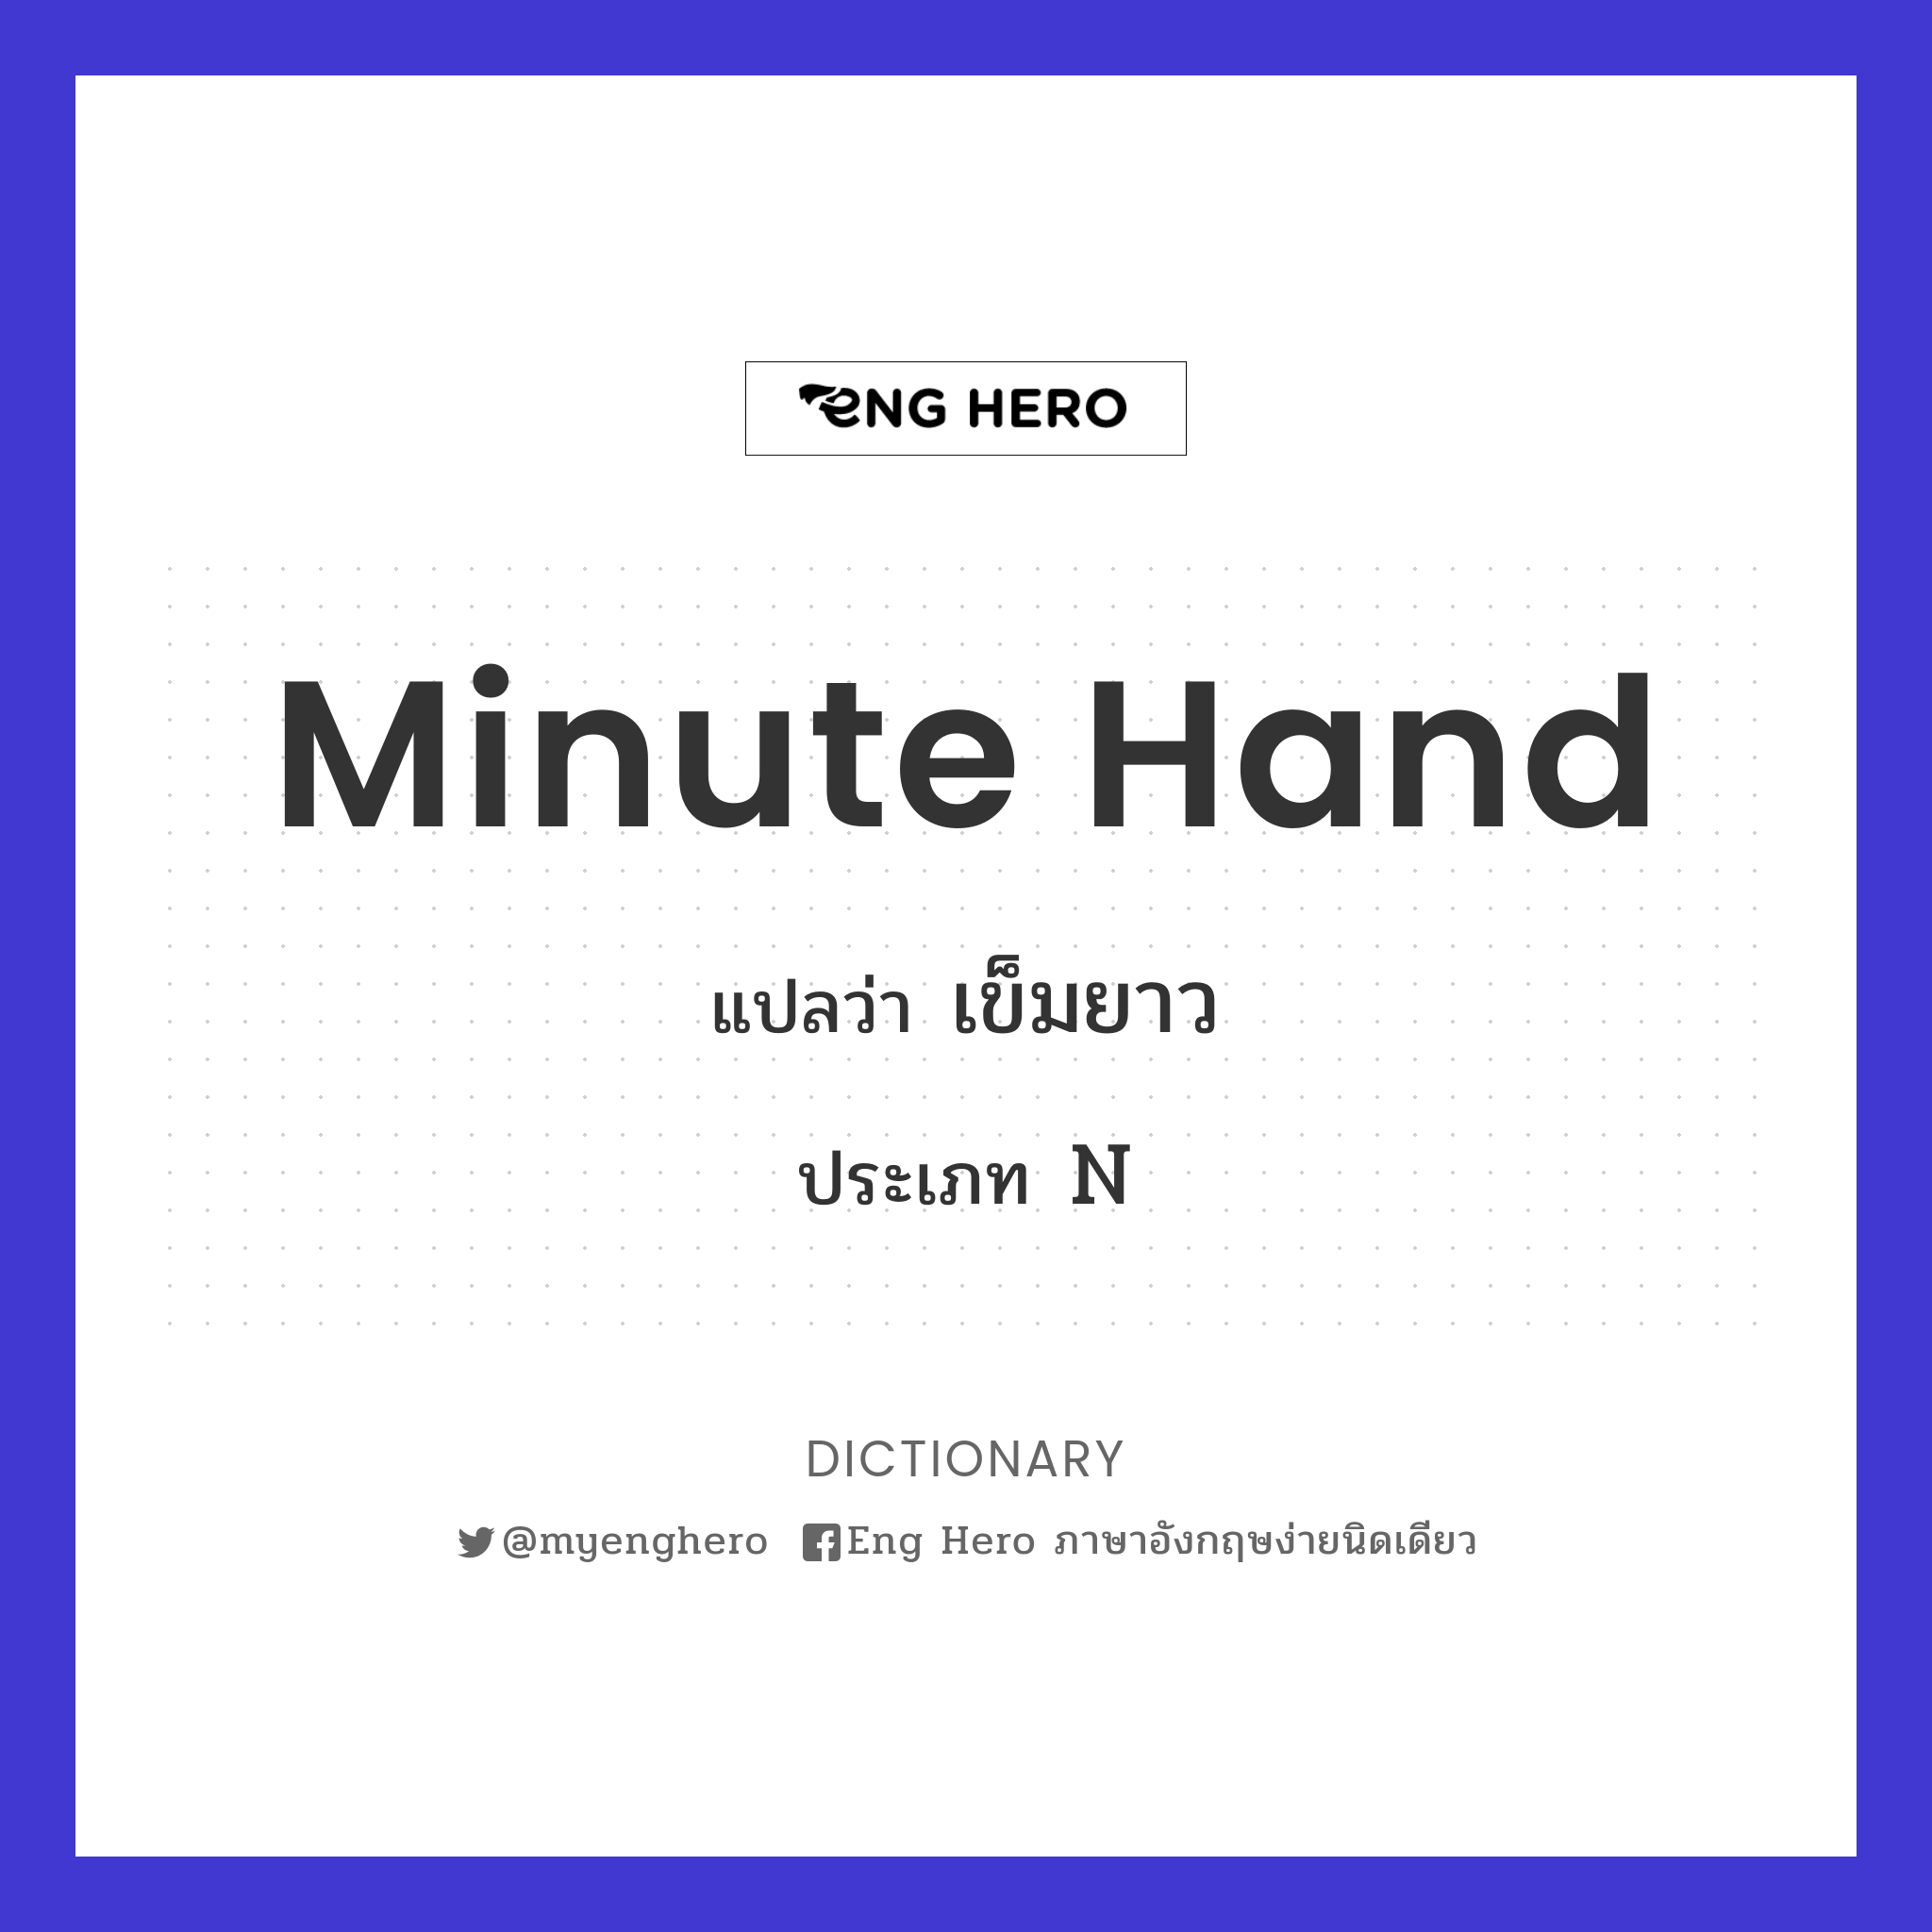 minute hand